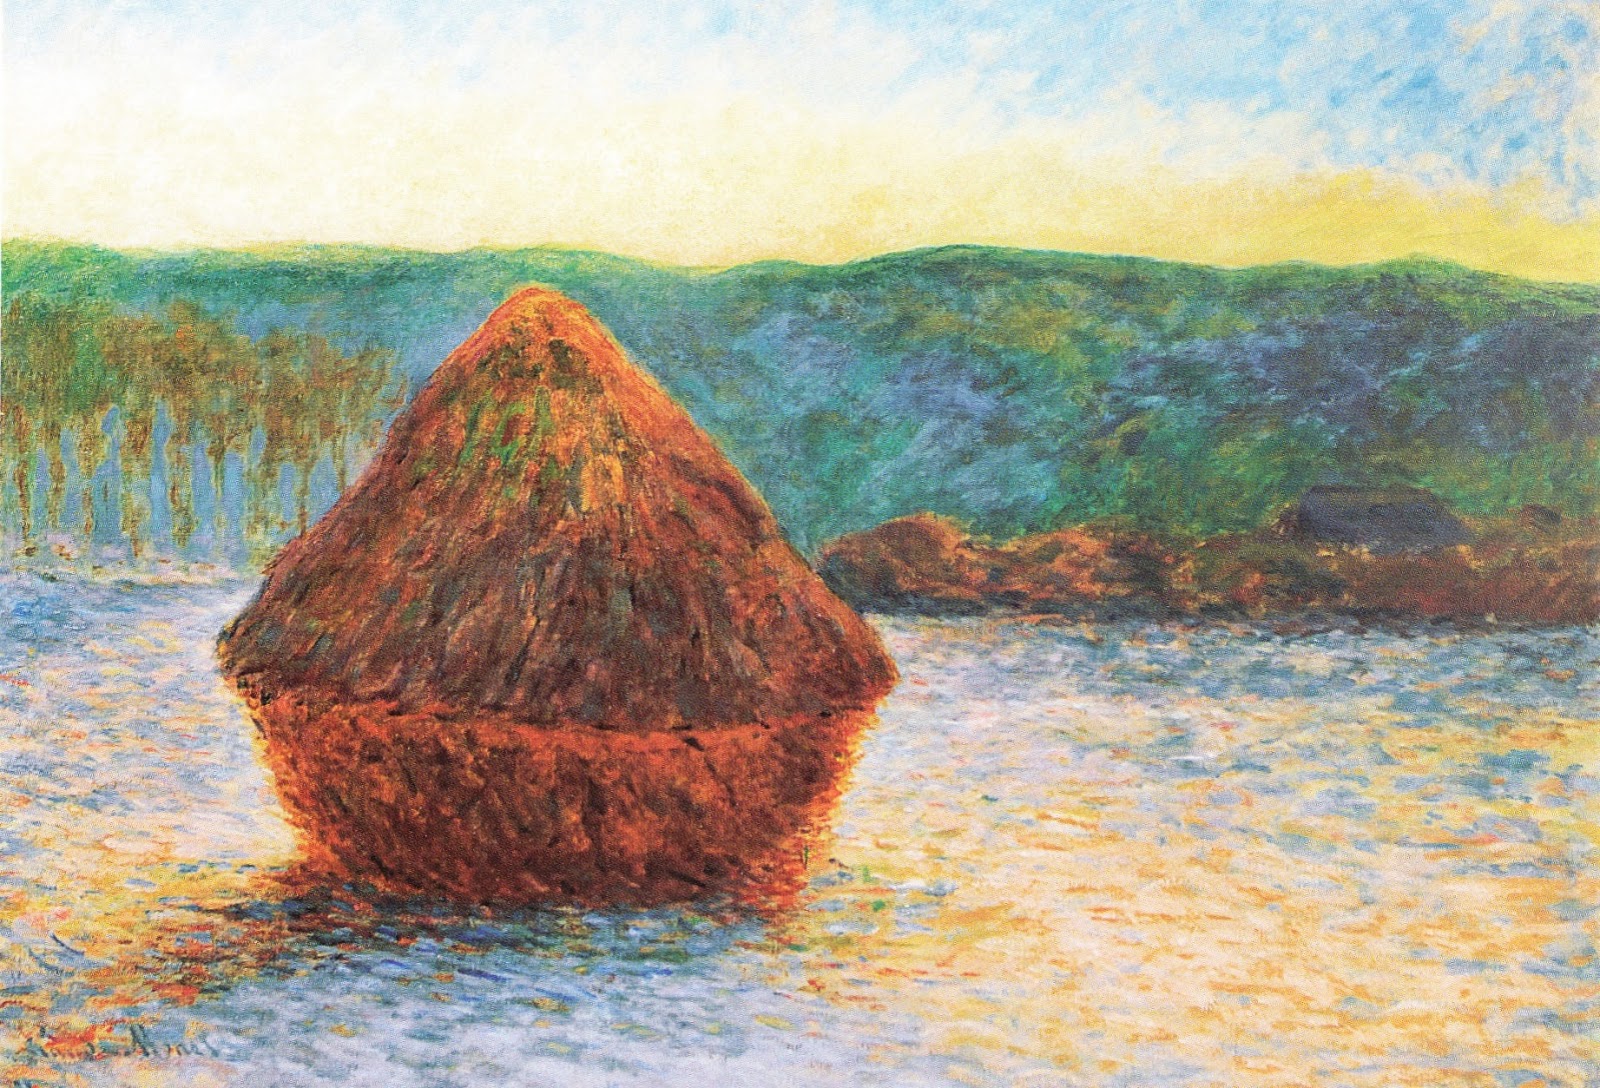 Claude+Monet-1840-1926 (255).jpg